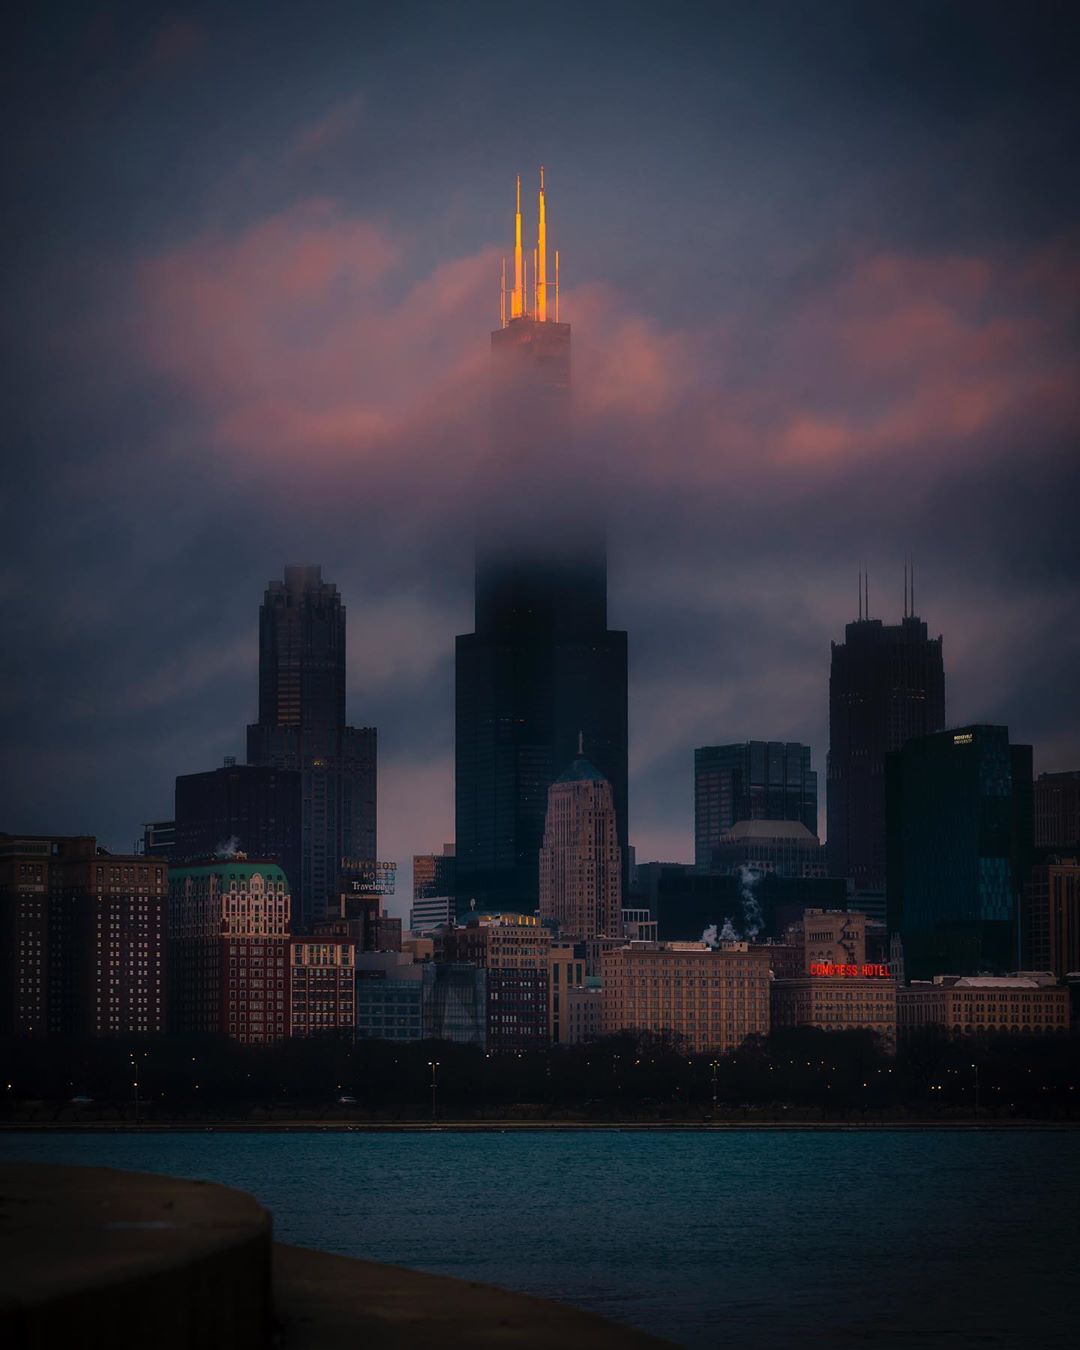 Улицы и архитектура Чикаго на снимках Эрика Марталера